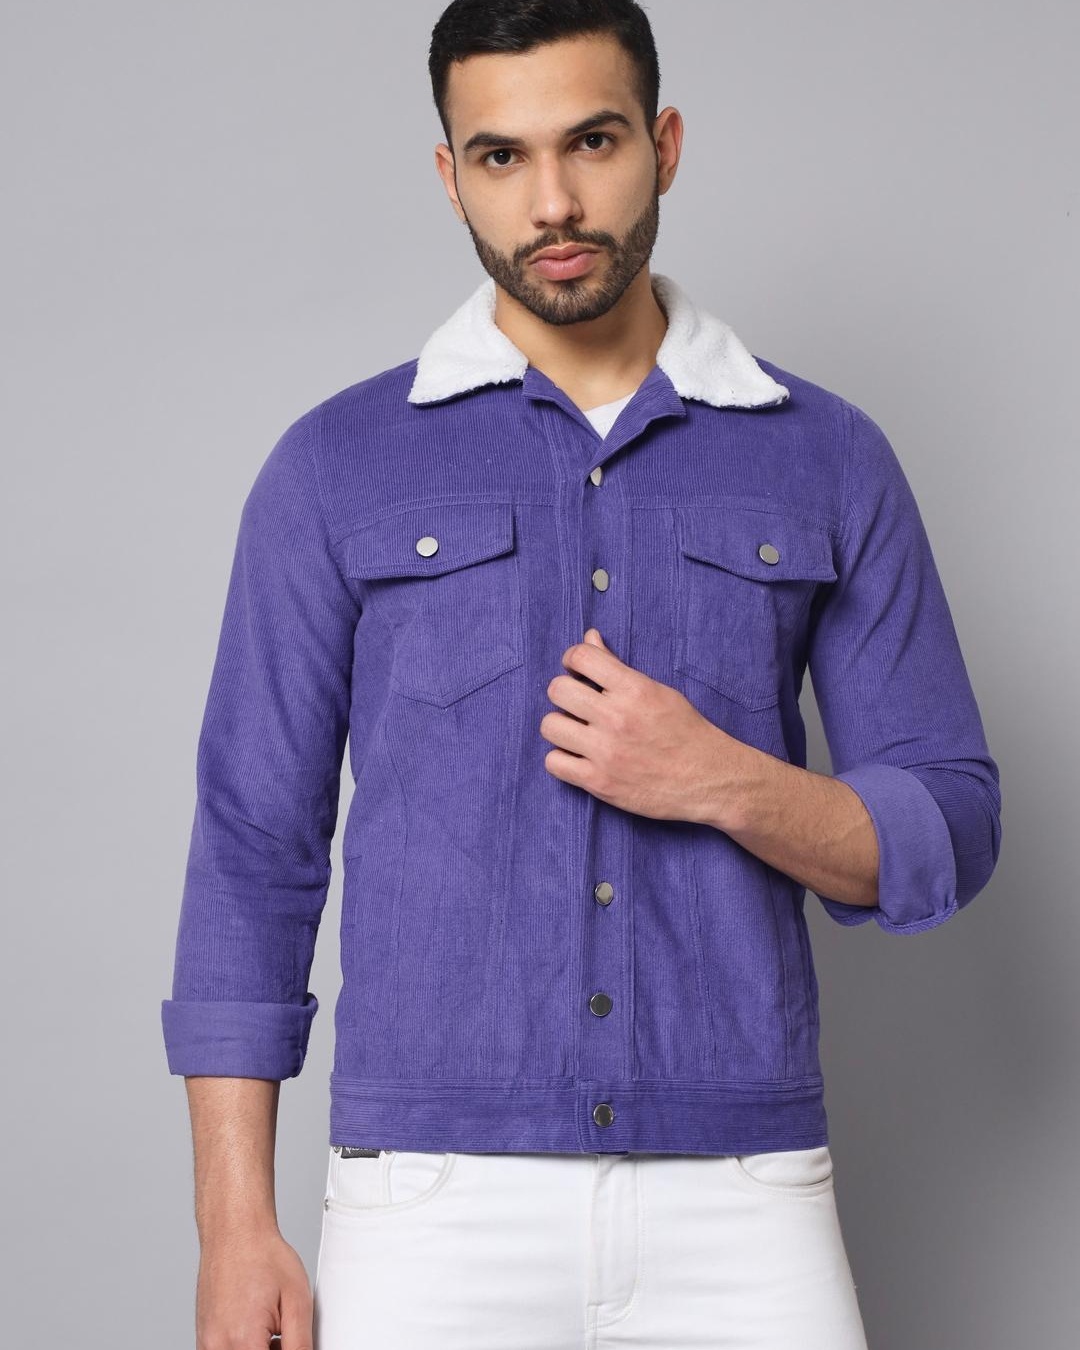 men s purple and white color block jacket 557965 1669896999 1